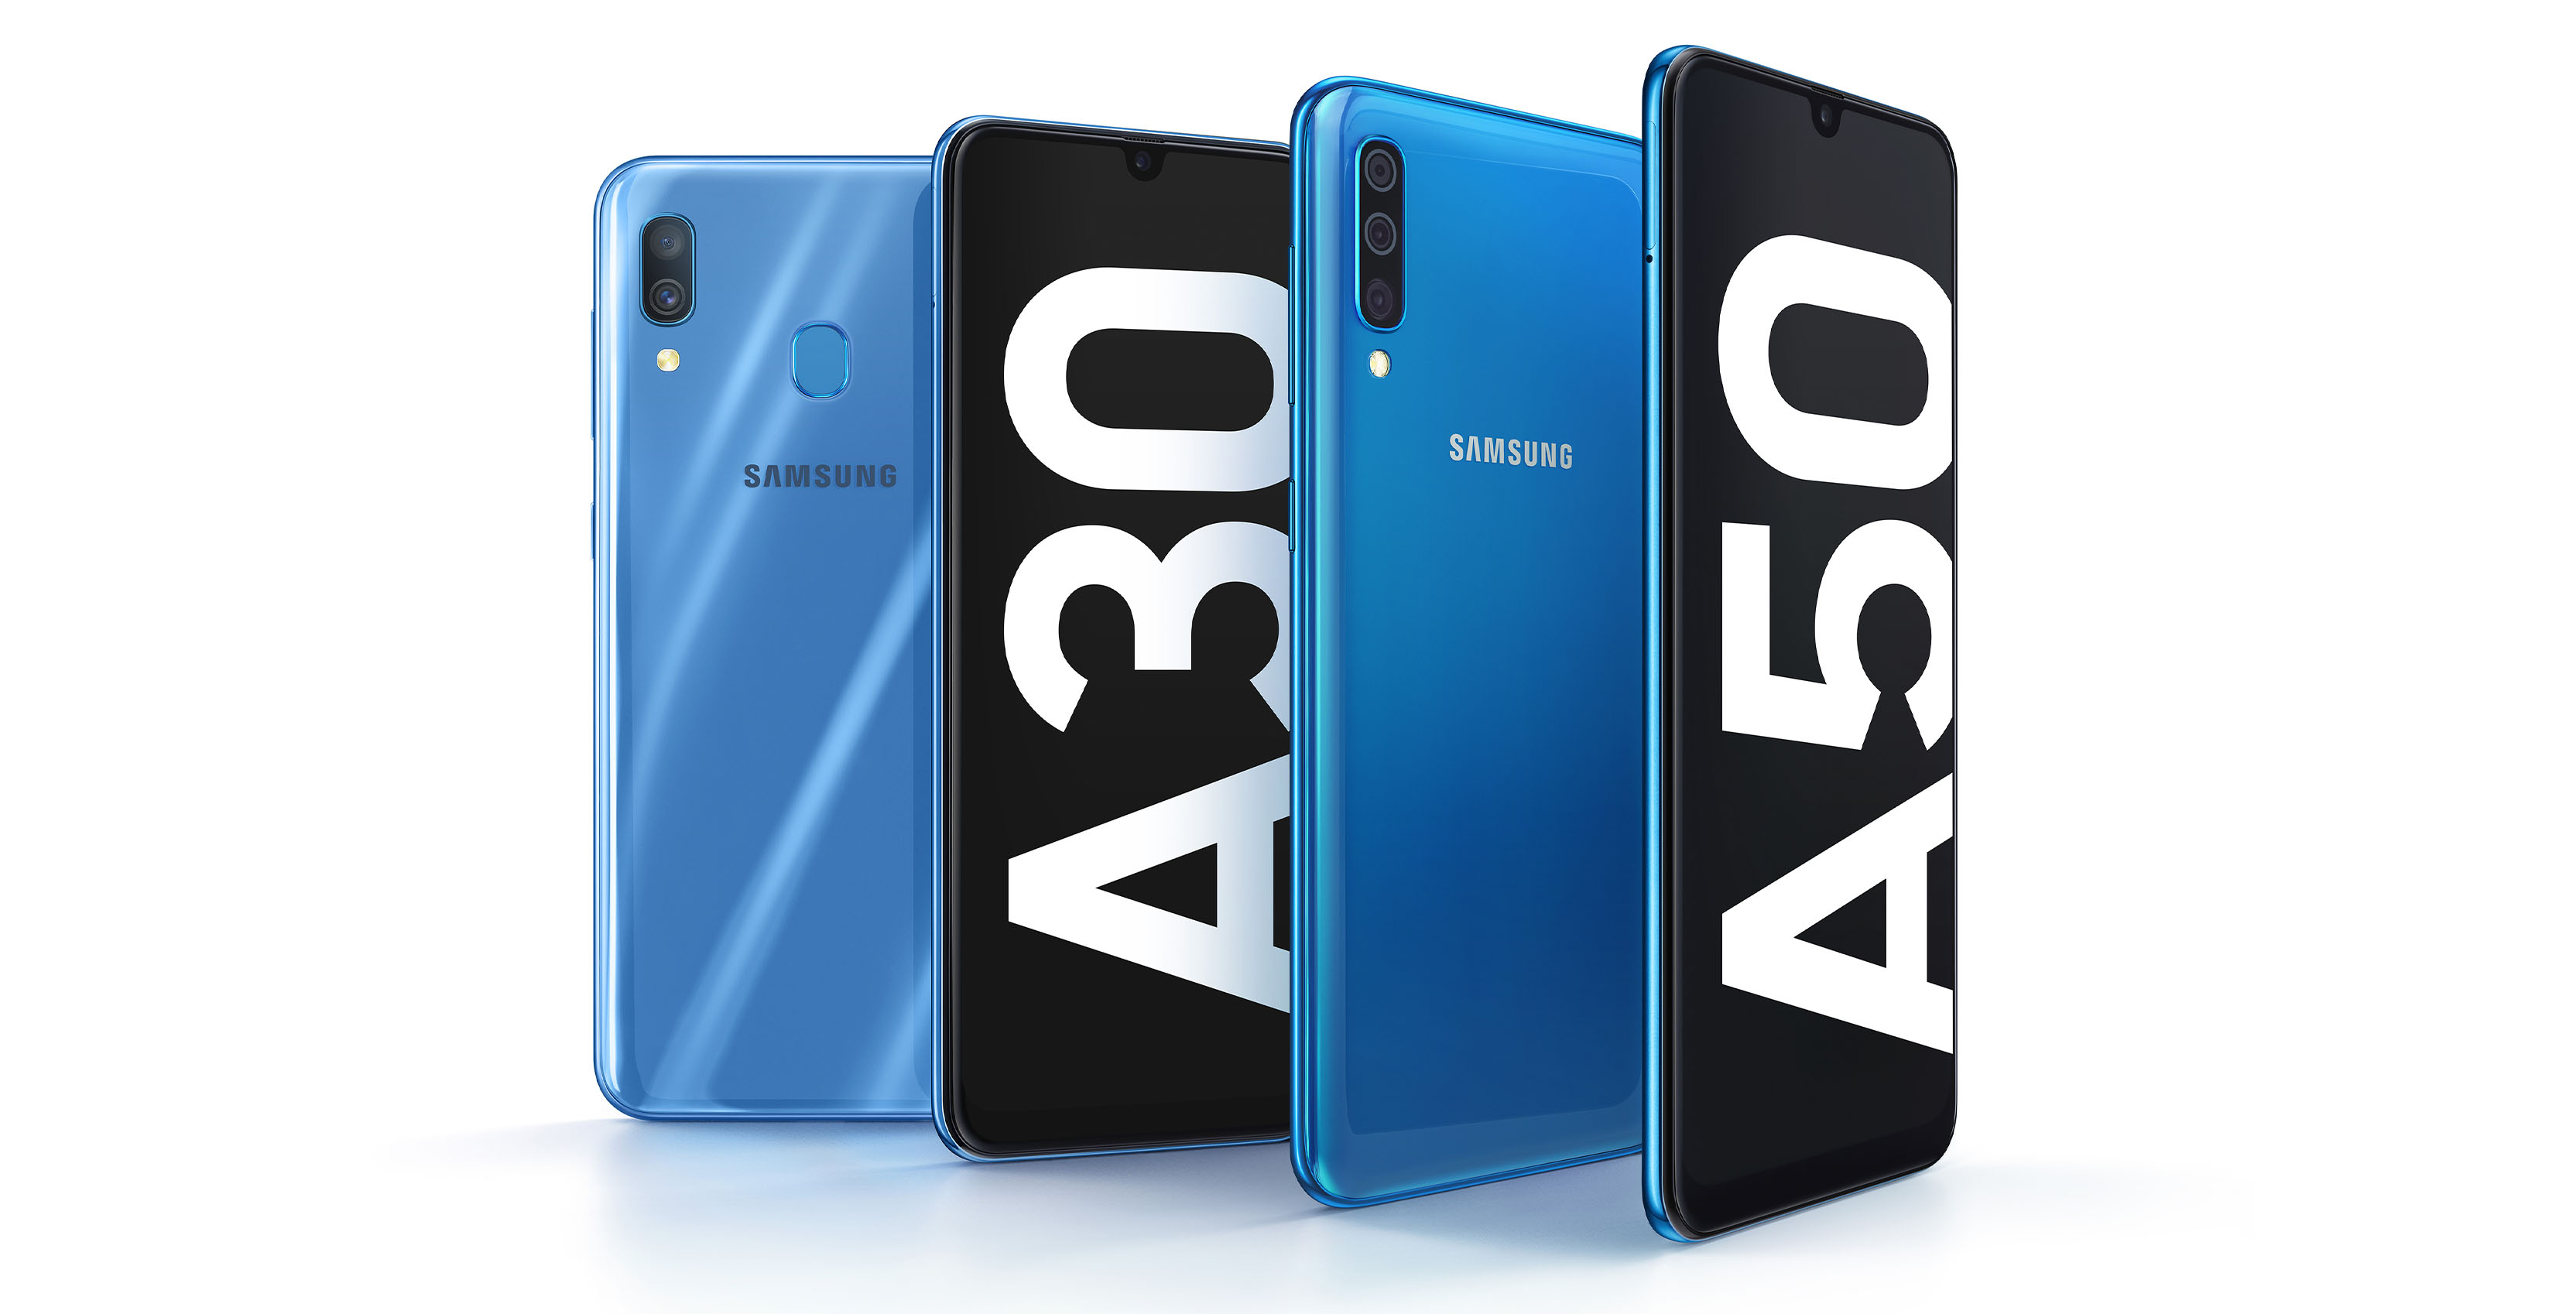 Samsung Galaxy A30 and A50